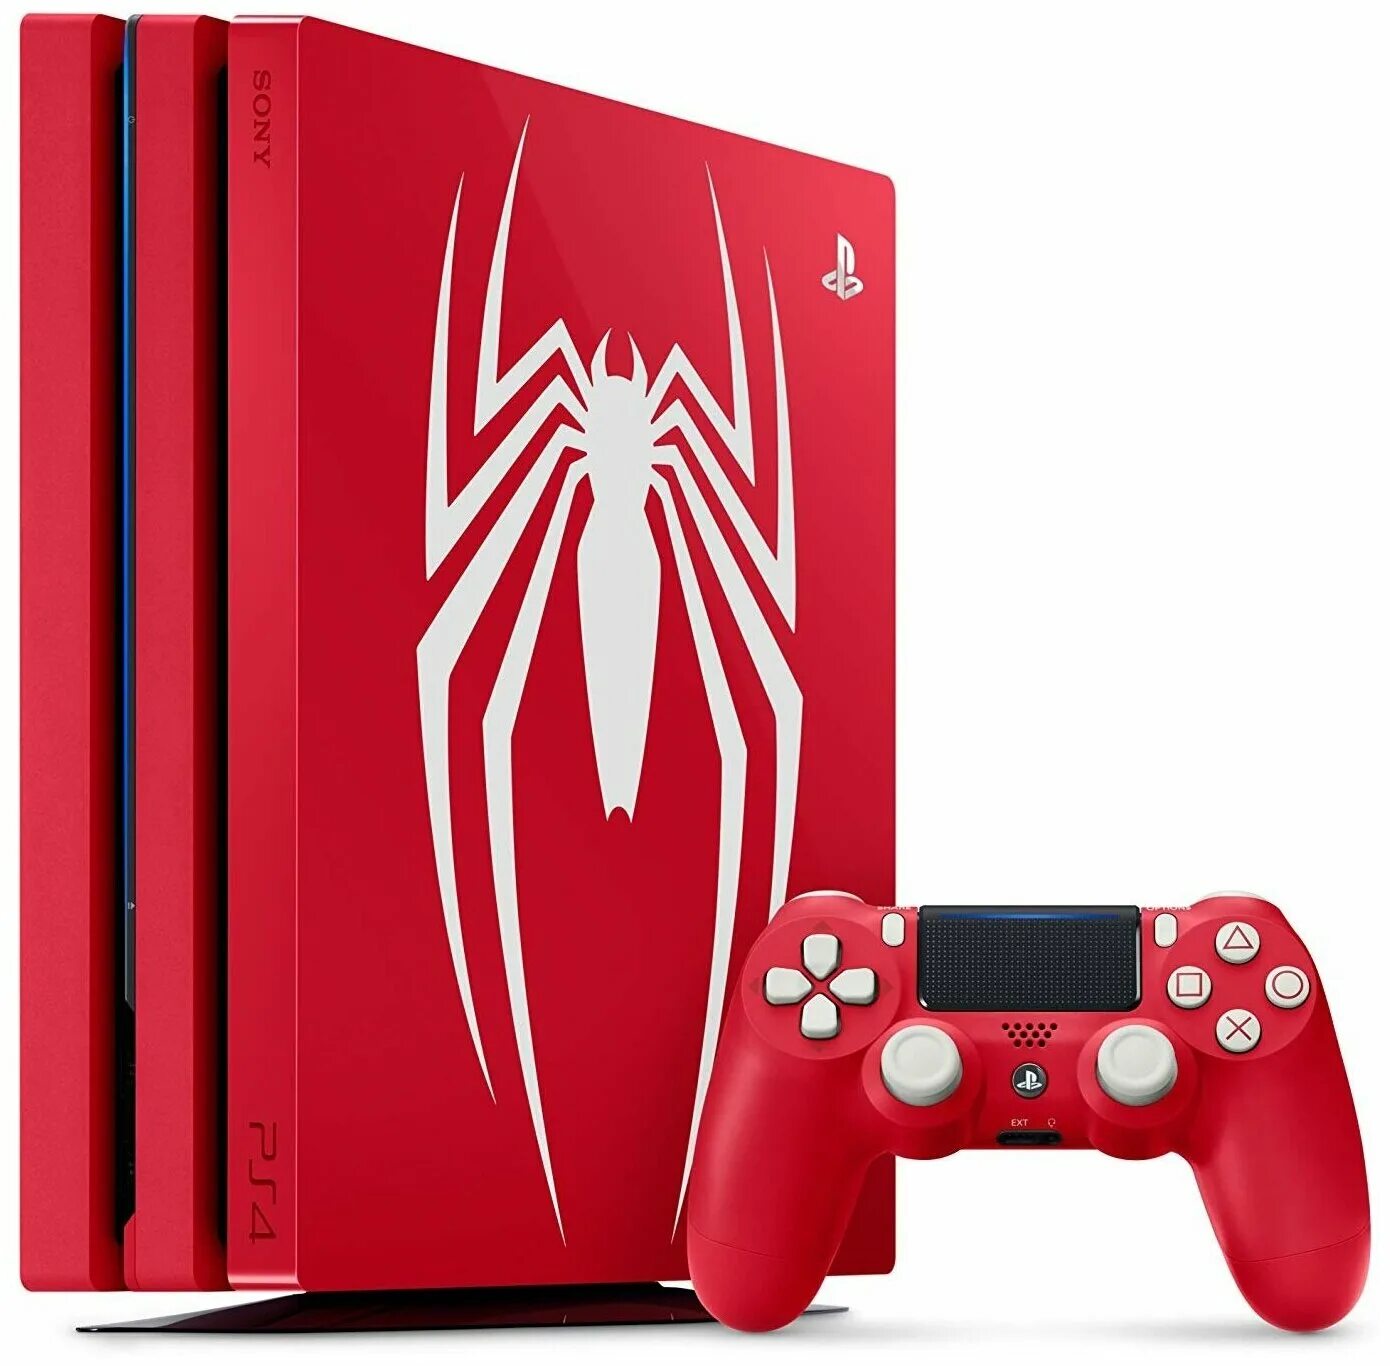 Спайдер про. Игровая приставка Sony PLAYSTATION 4 Pro Spider-man. Sony PLAYSTATION 4 Pro Limited Edition. Ps4 Pro Spider man Limited Edition. Sony ps4 Pro 1tb Limited Edition.